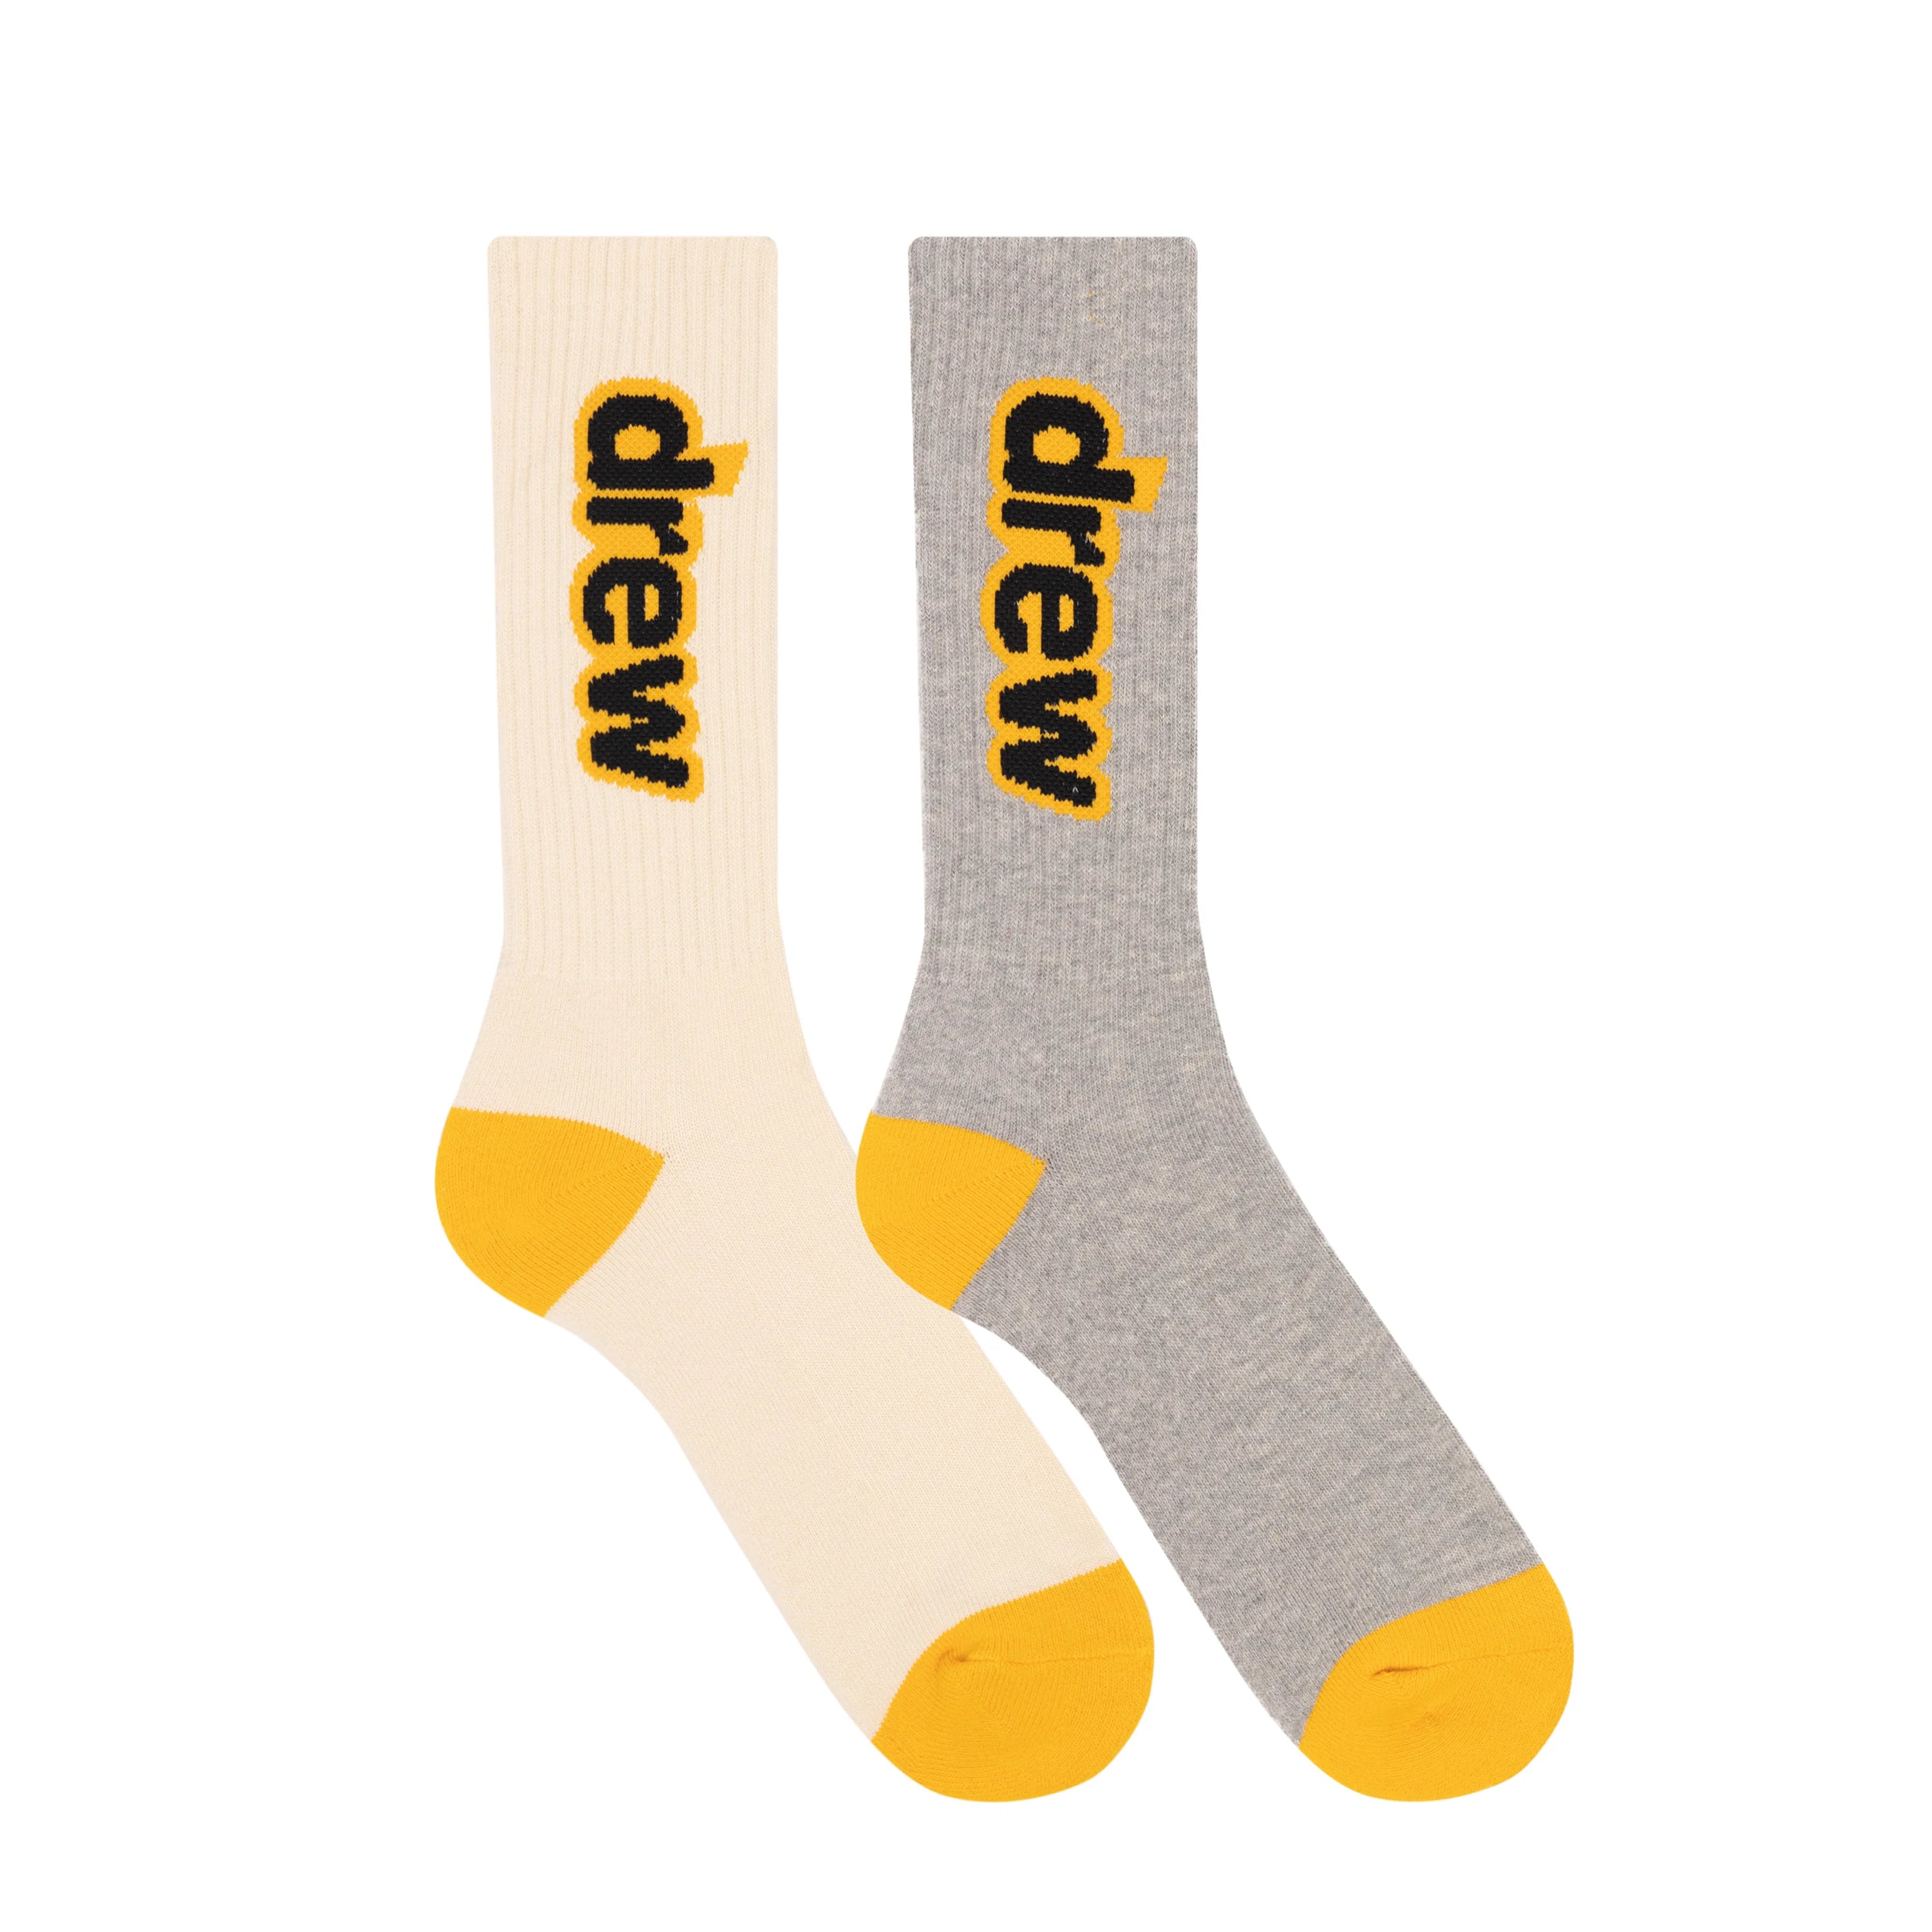 Drew House Socks 2pk - Heather Grey/off white